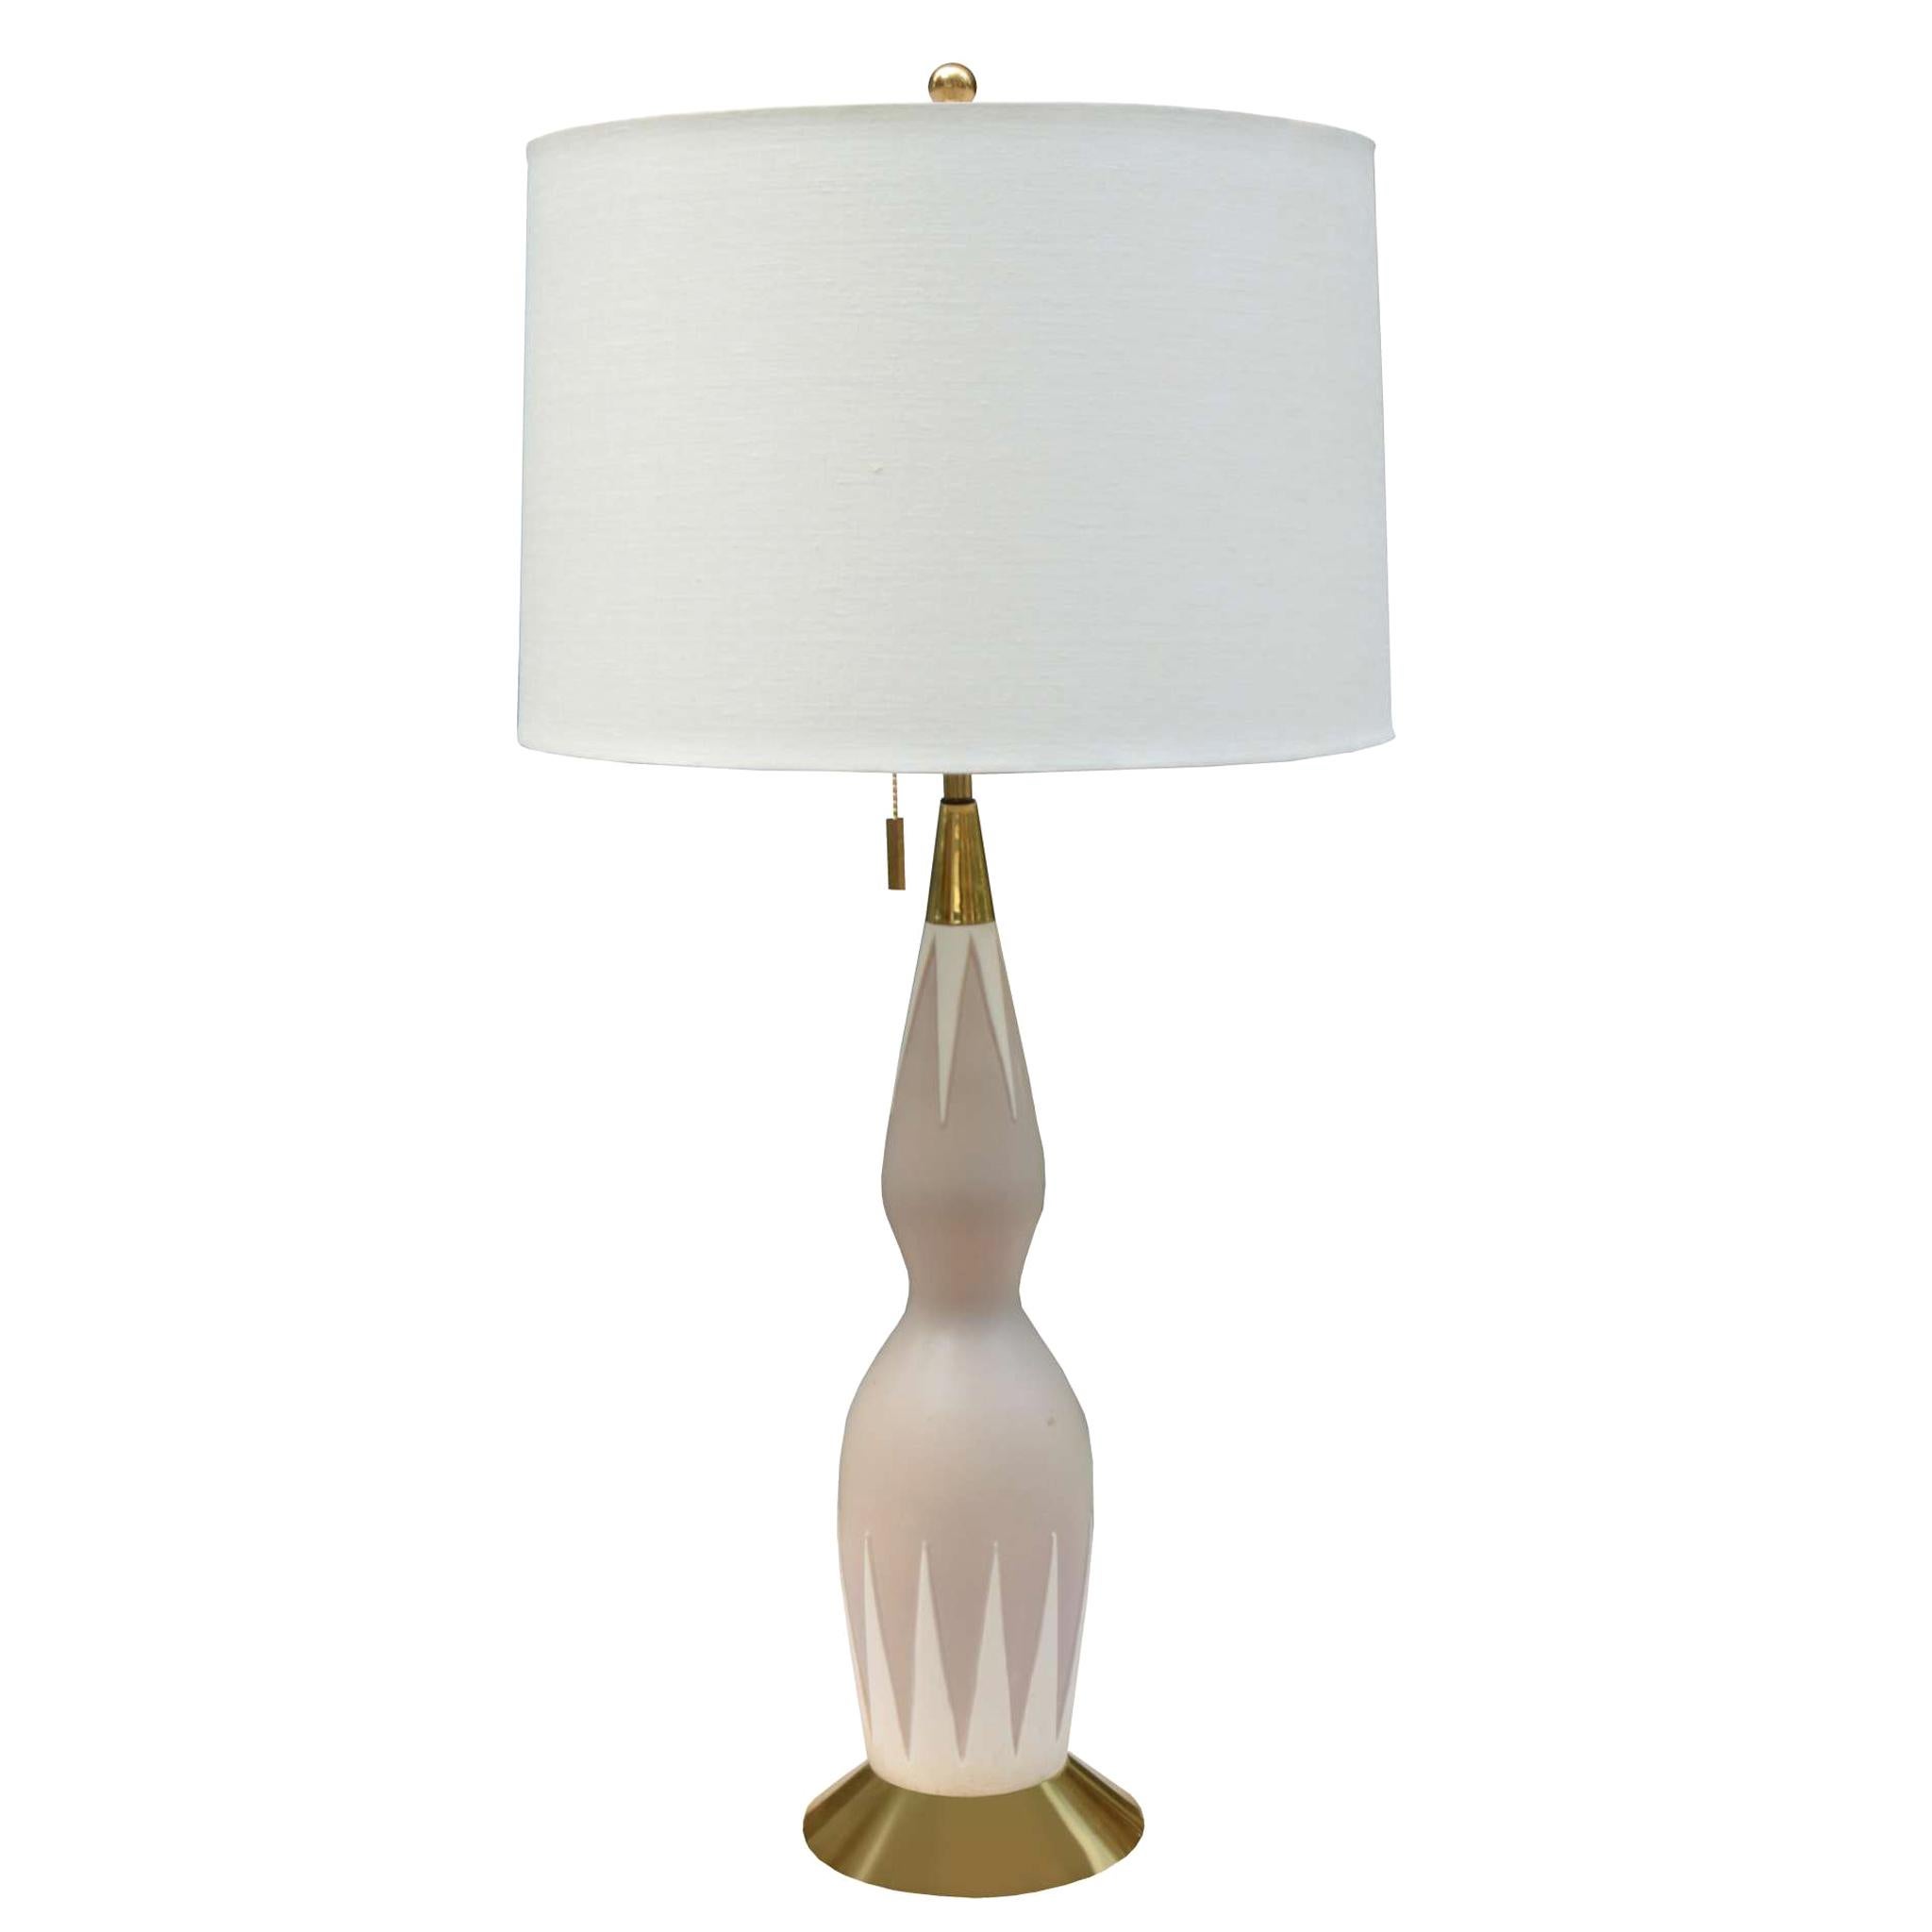 Gerald Thurston Single Table Lamp